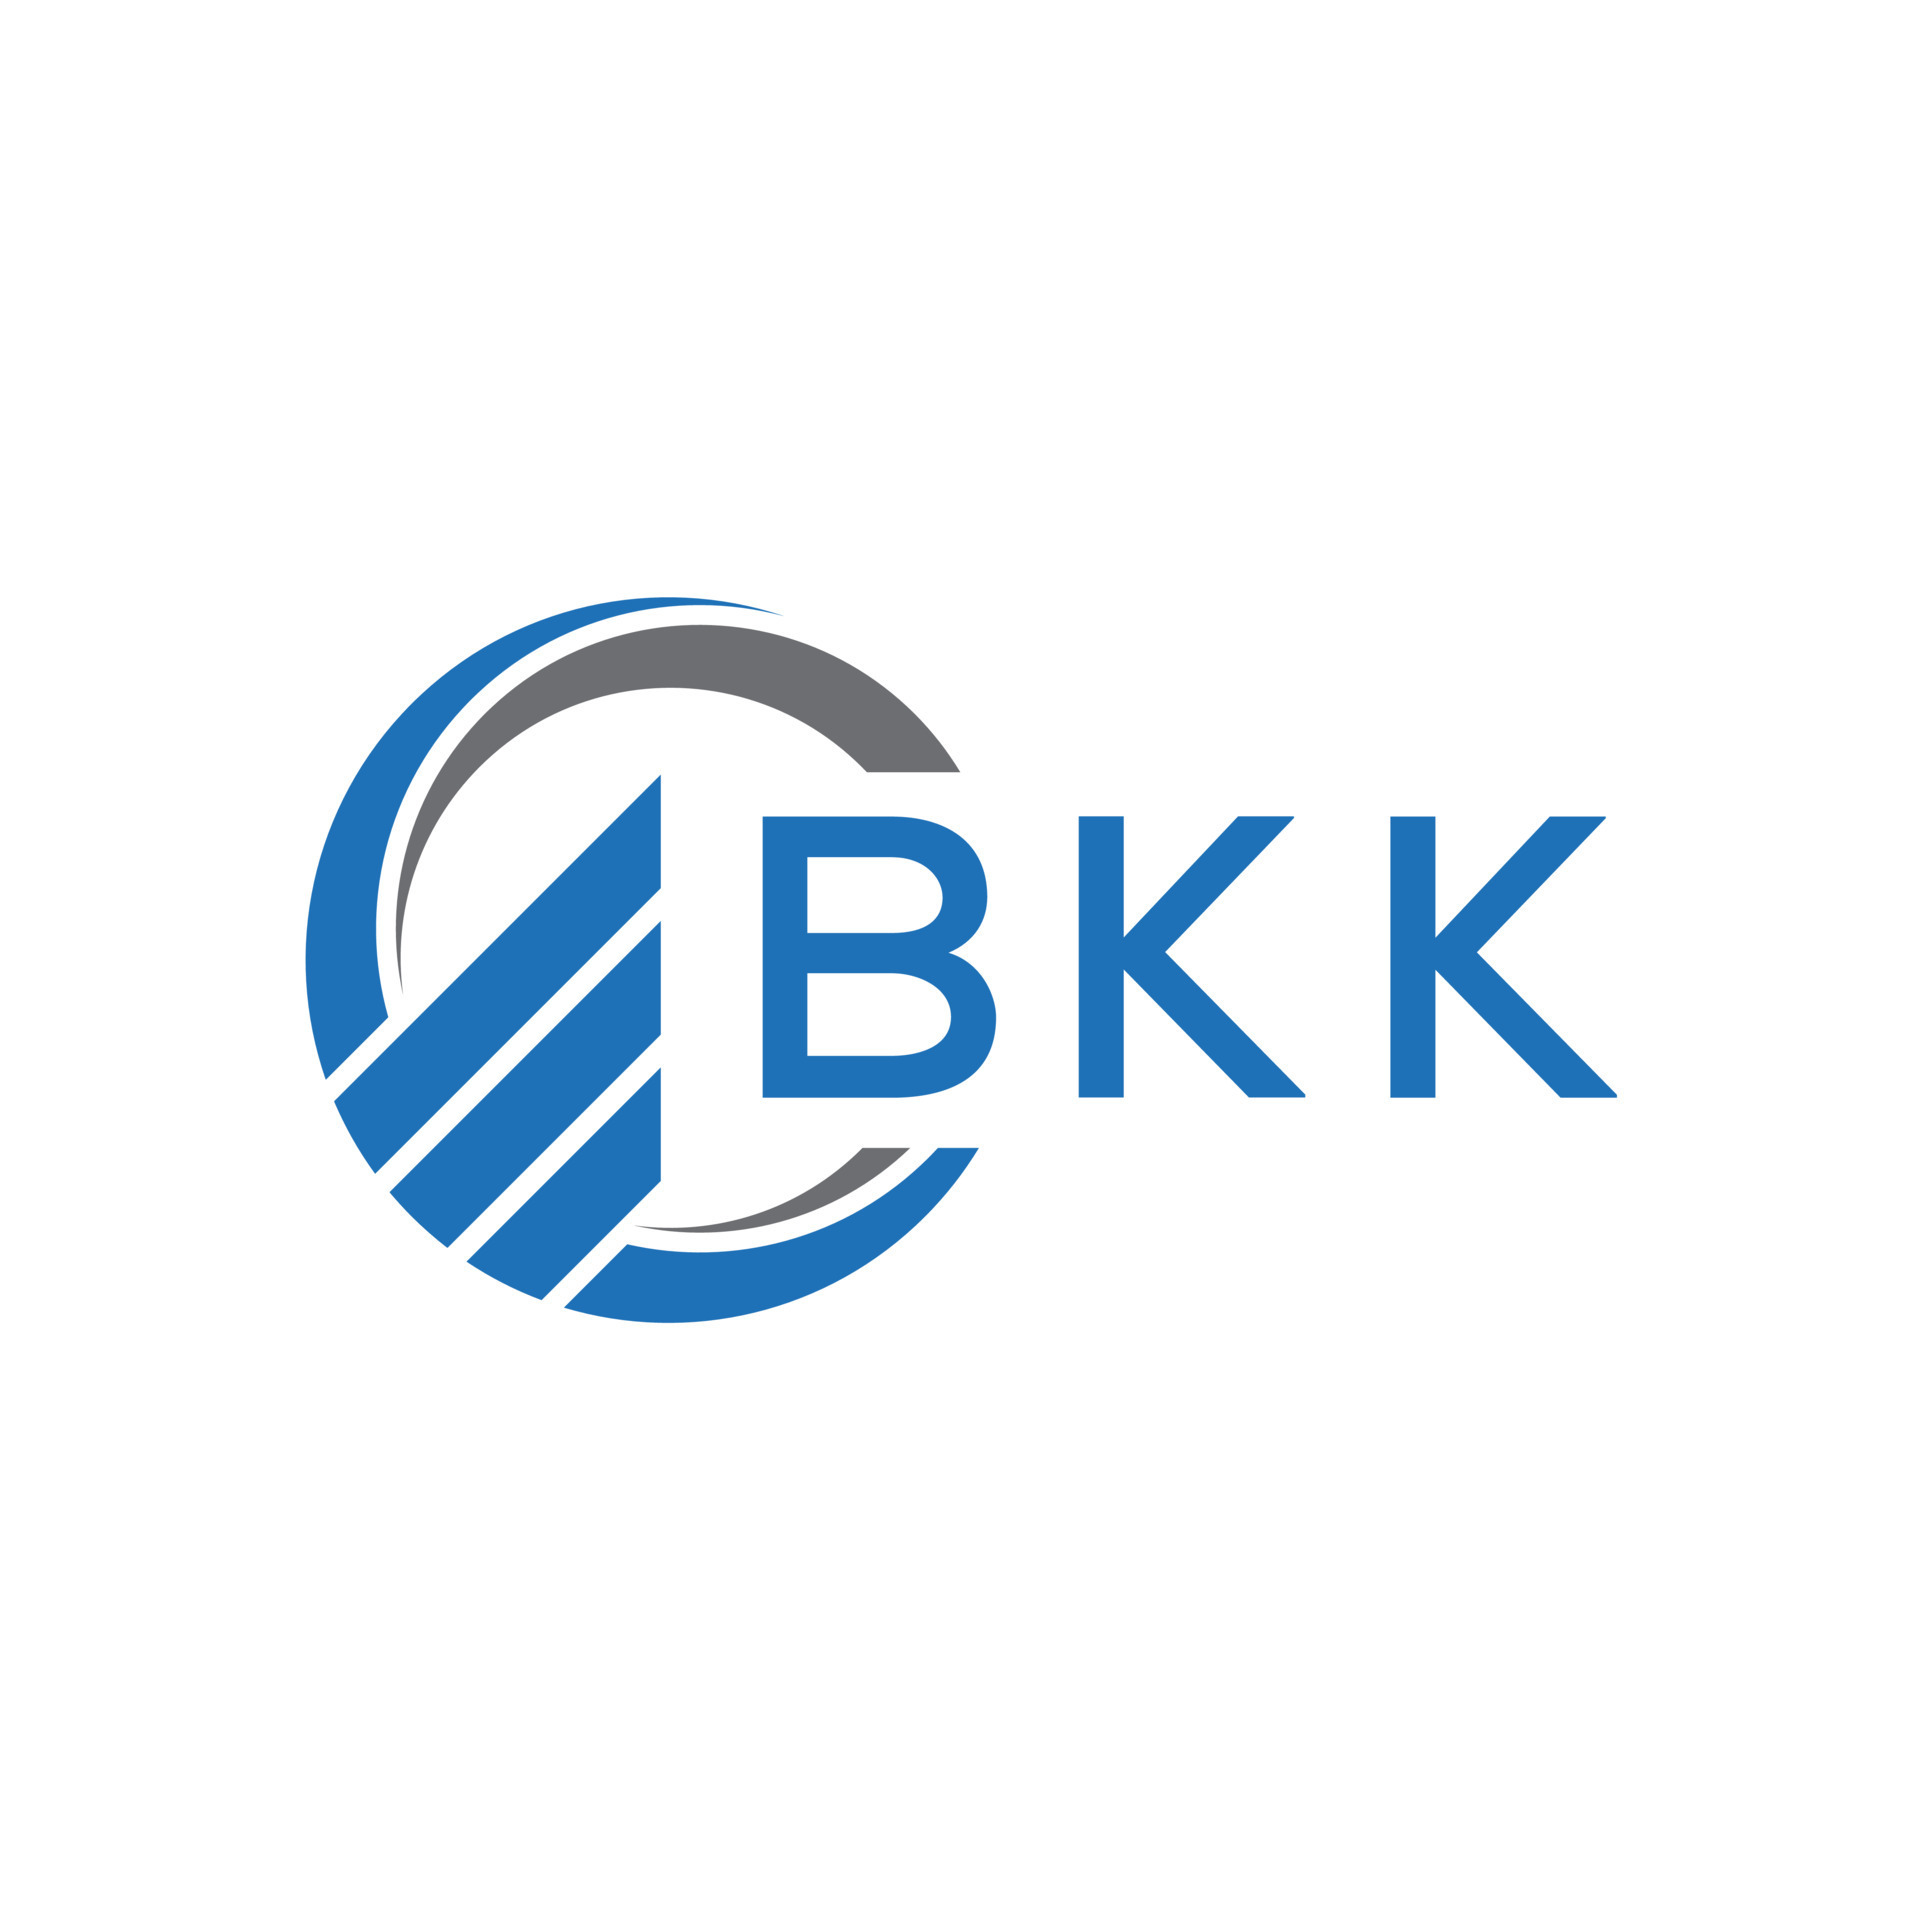 BKK Flat accounting logo design on white background. BKK creative